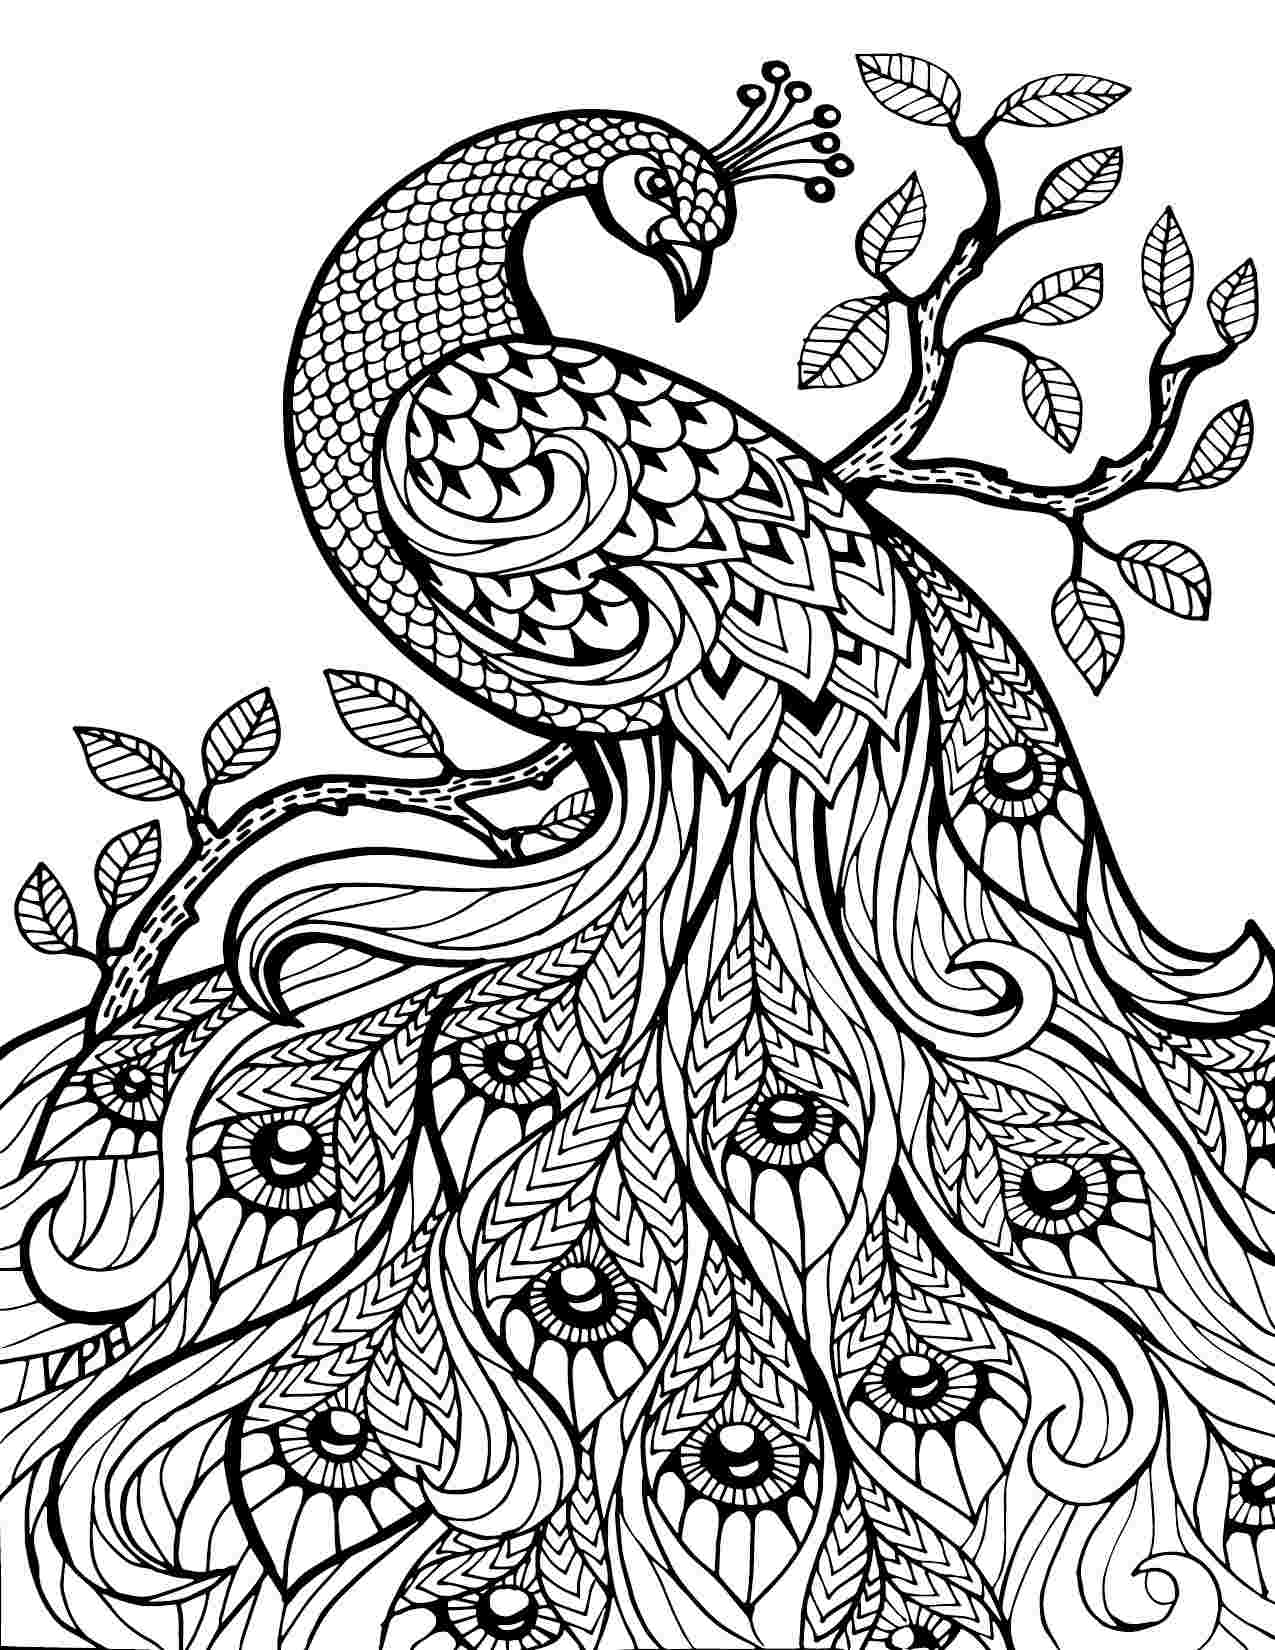 Coloring Sheet- Peacock